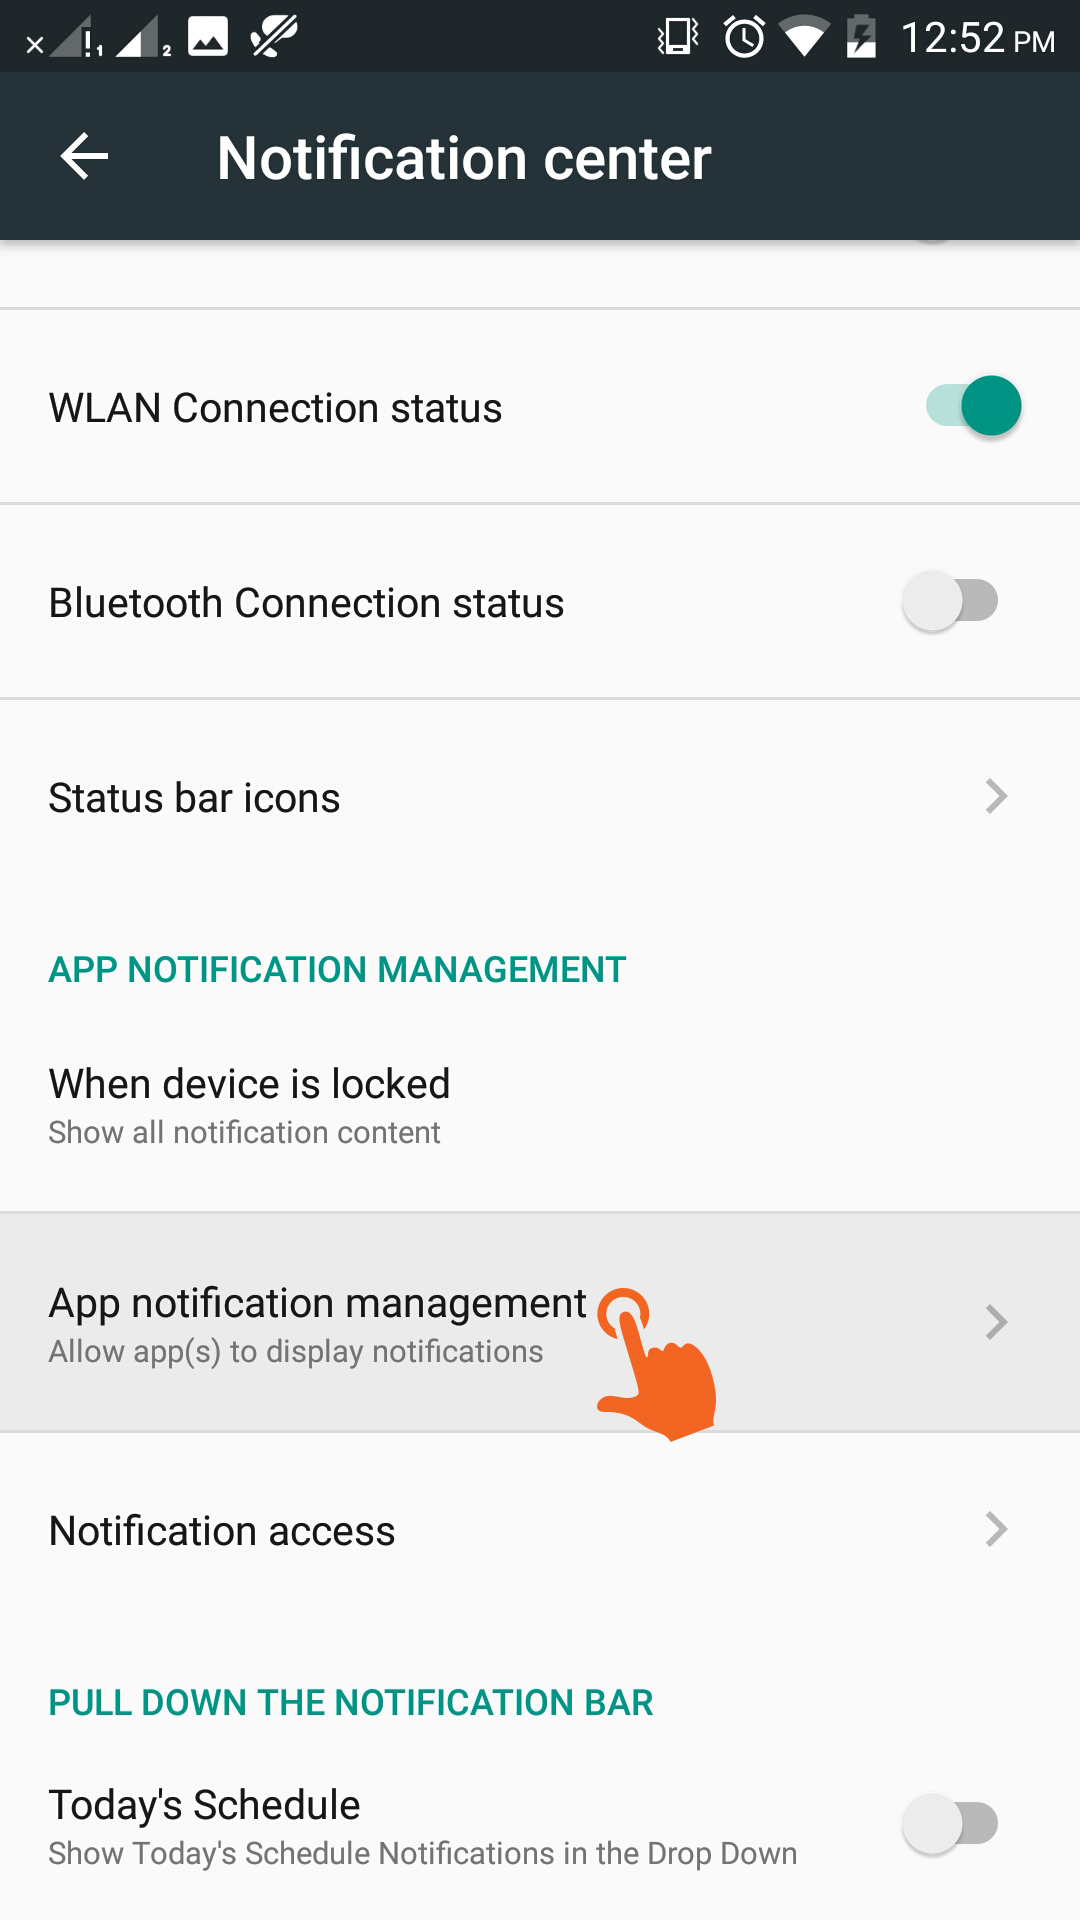 Choose 'App notification management'